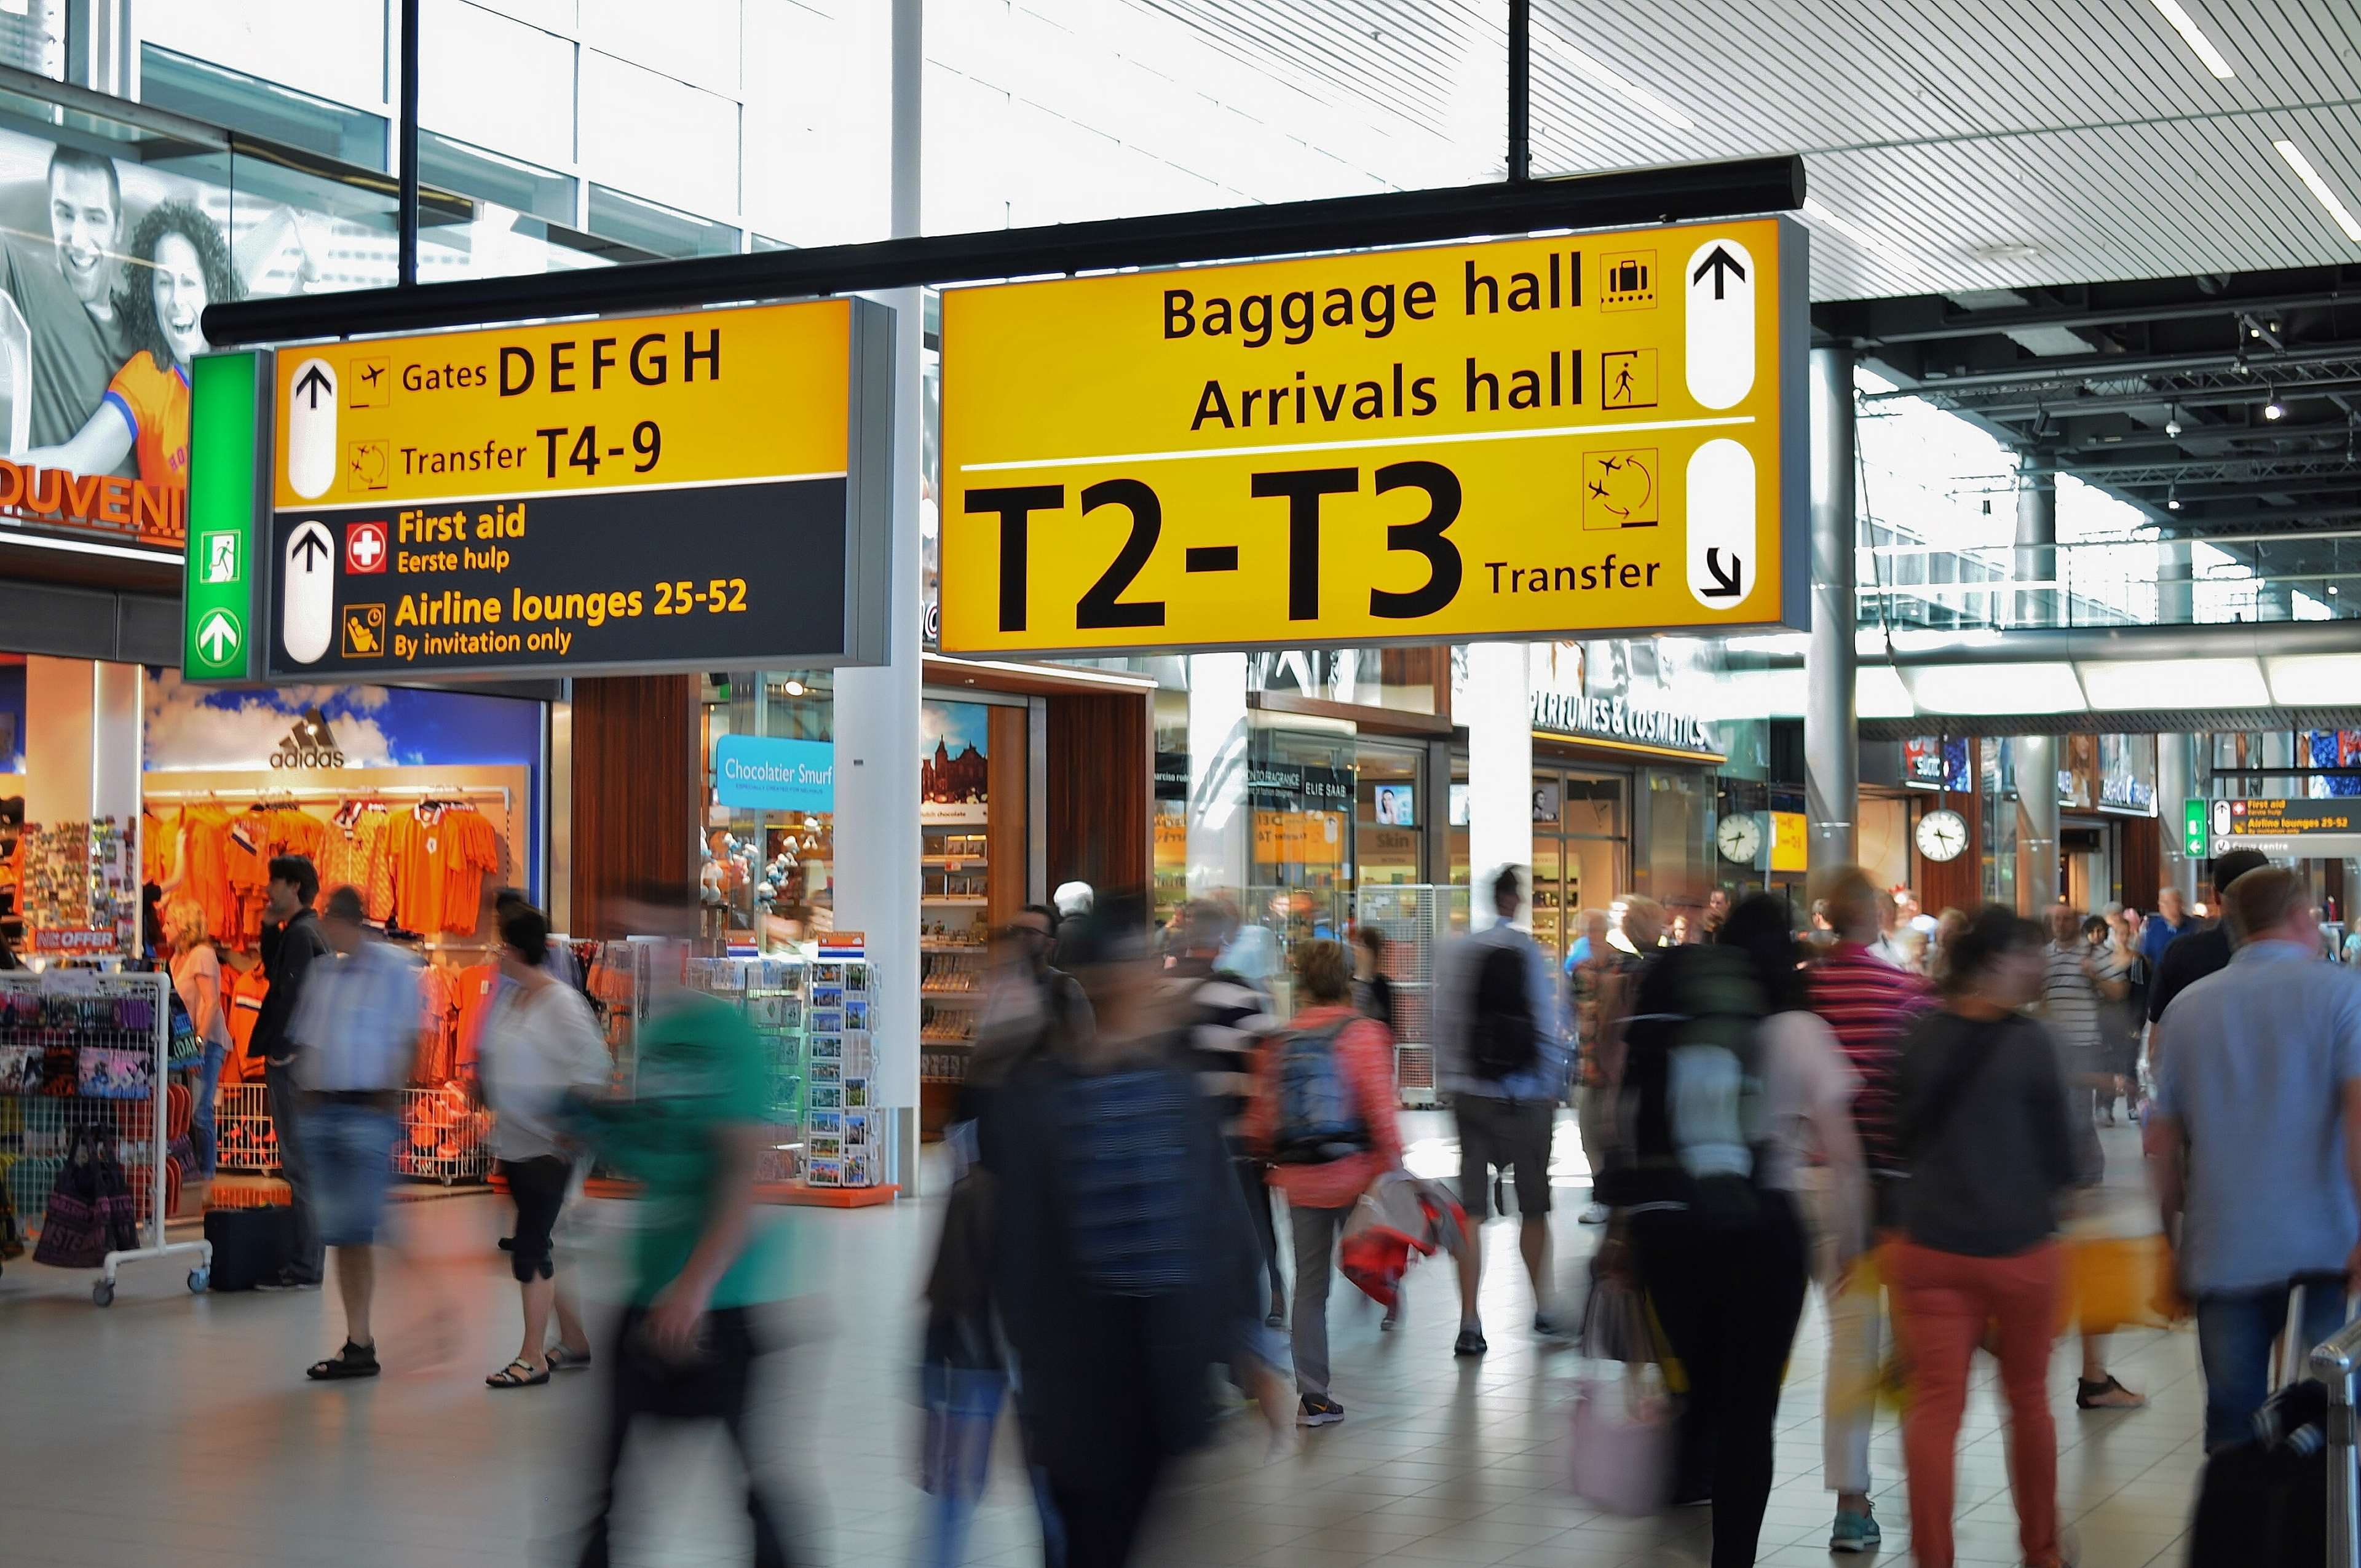 airport, amsterdam, arrival, blur, boarding, crowd, departure